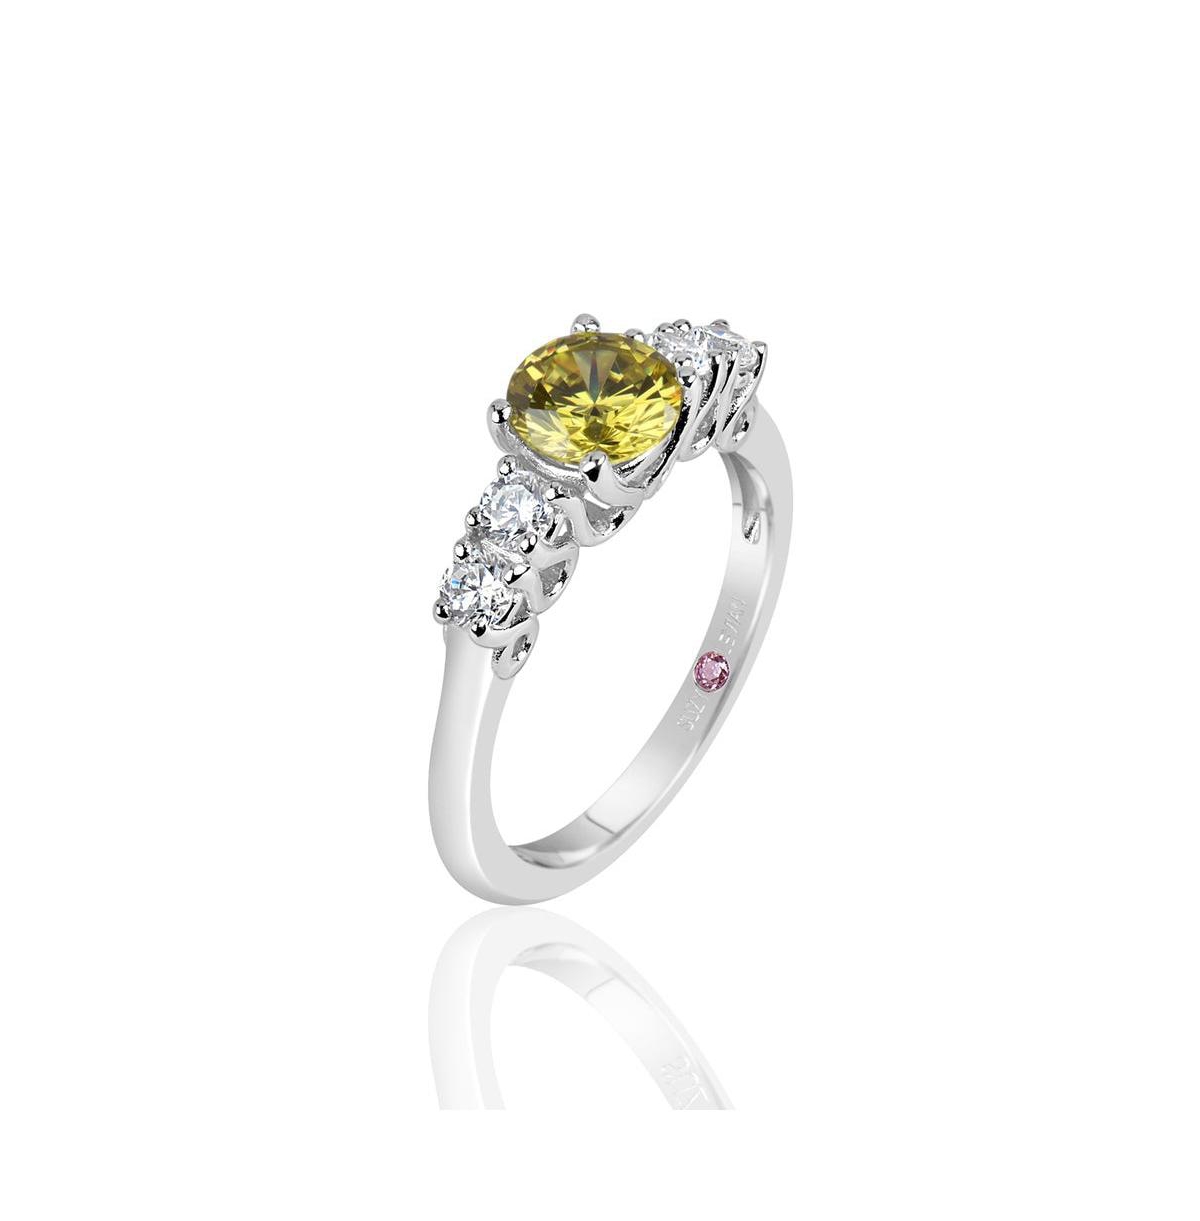 Suzy Levian Sterling Silver Asscher Cut Cubic Zirconia Engagement Ring - Yellow